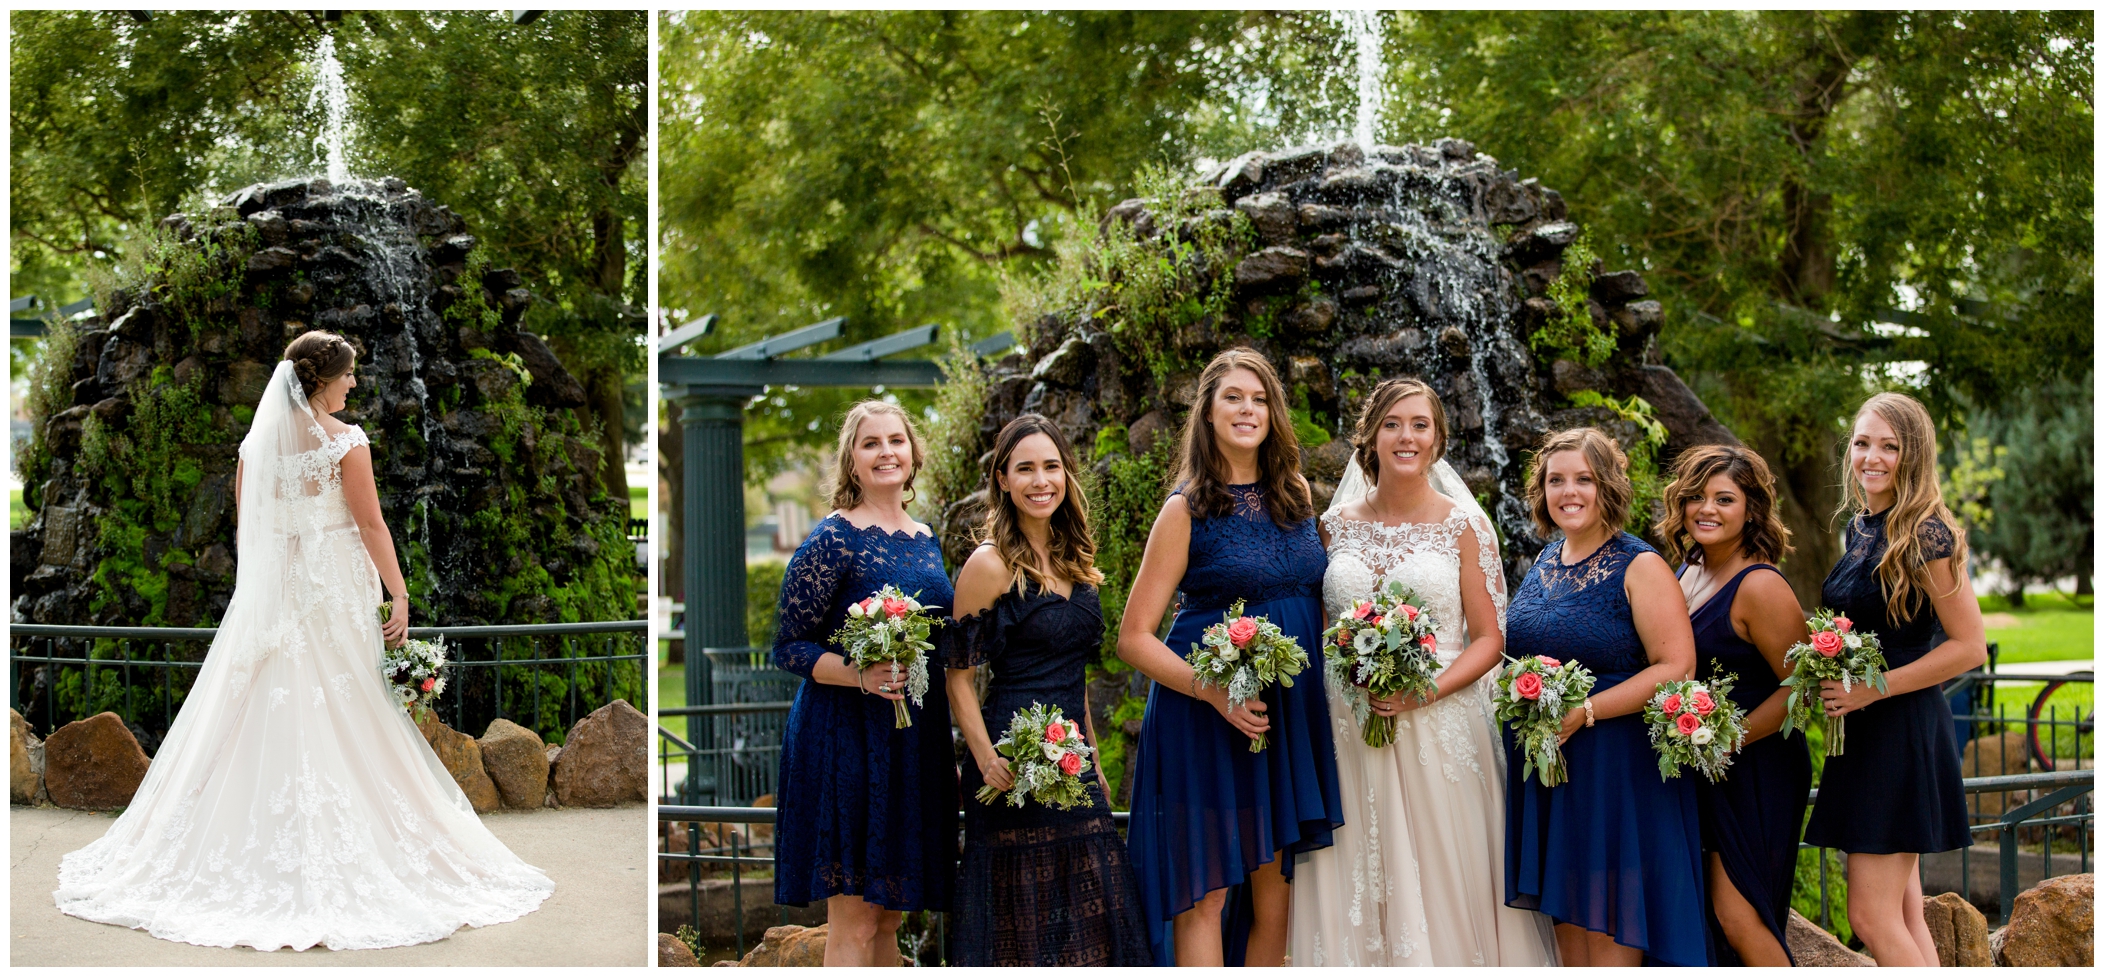 Lincoln Park Greeley wedding photos by a fountain 